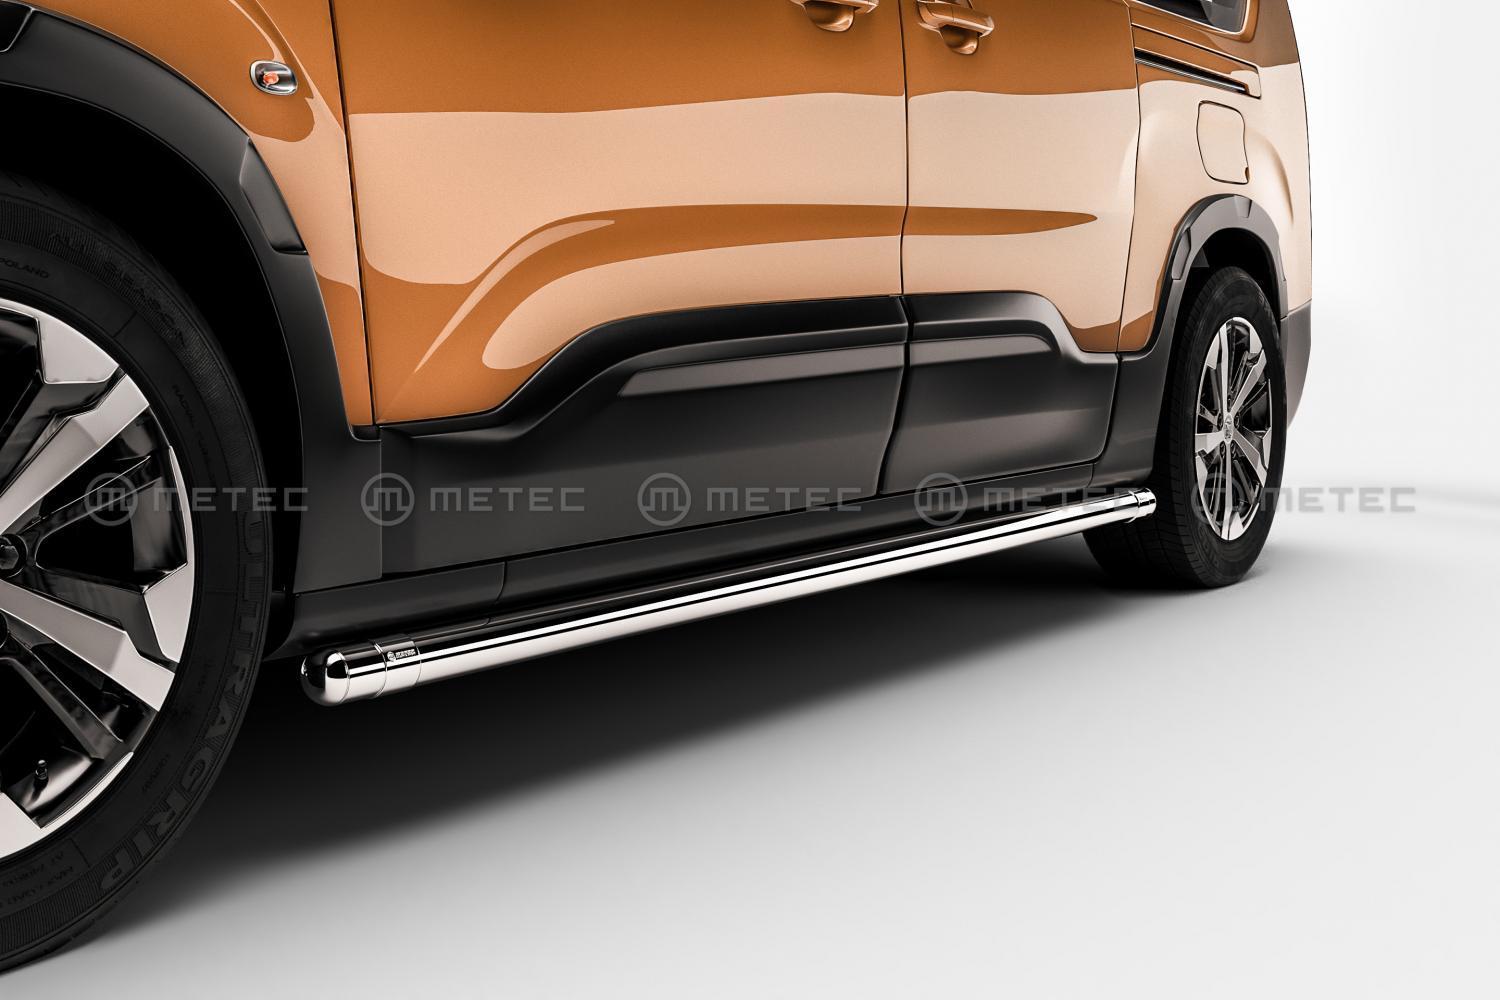 Opel Combo Side bars (Metec)